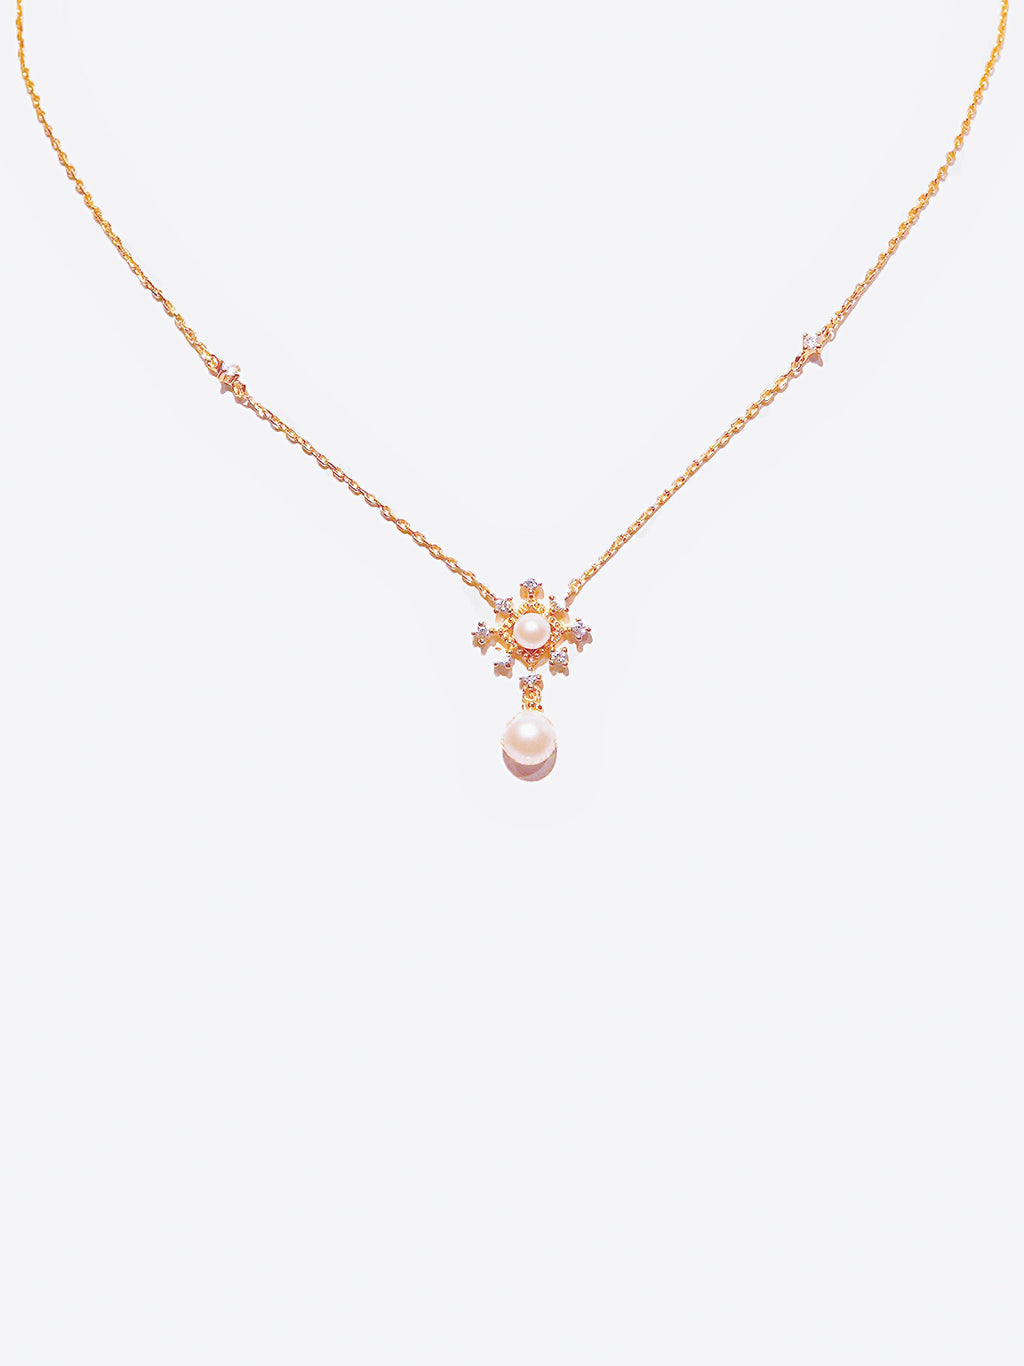 LAFIT · The Wishing Star - Necklace  簡約精緻珍珠頸鏈